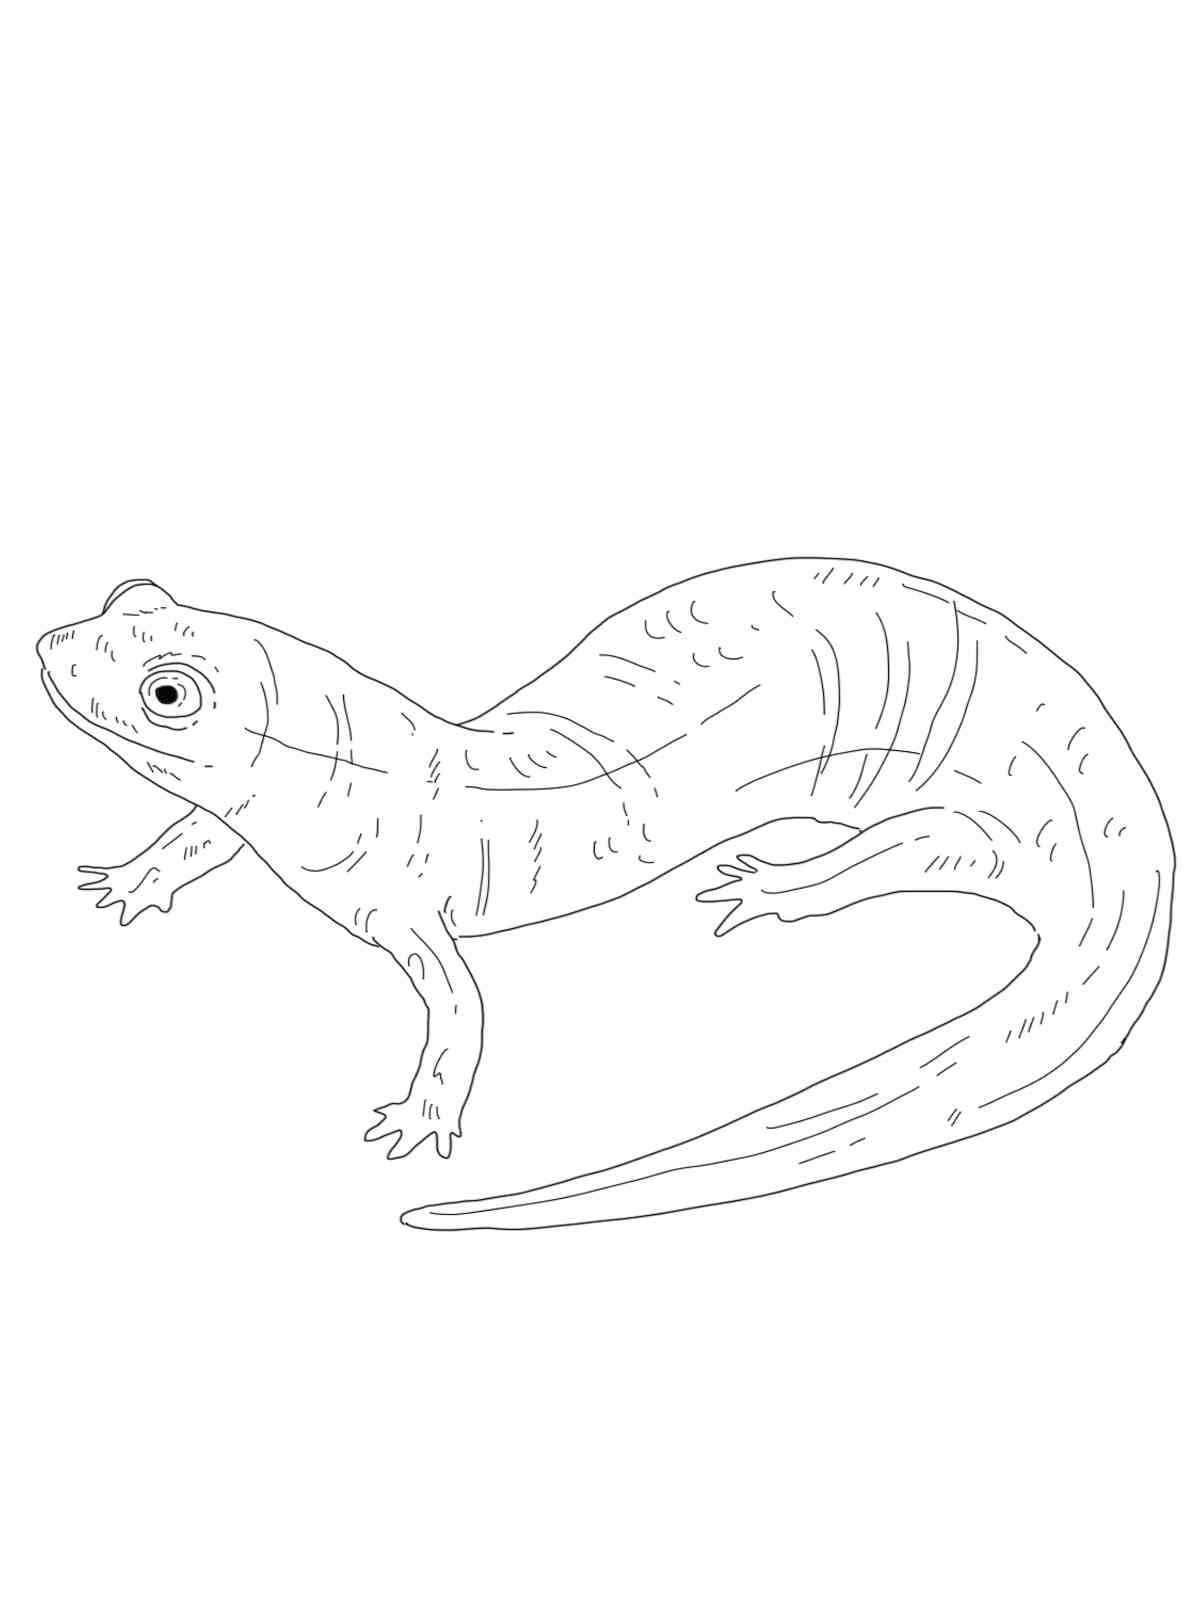 Realistic Salamander coloring page